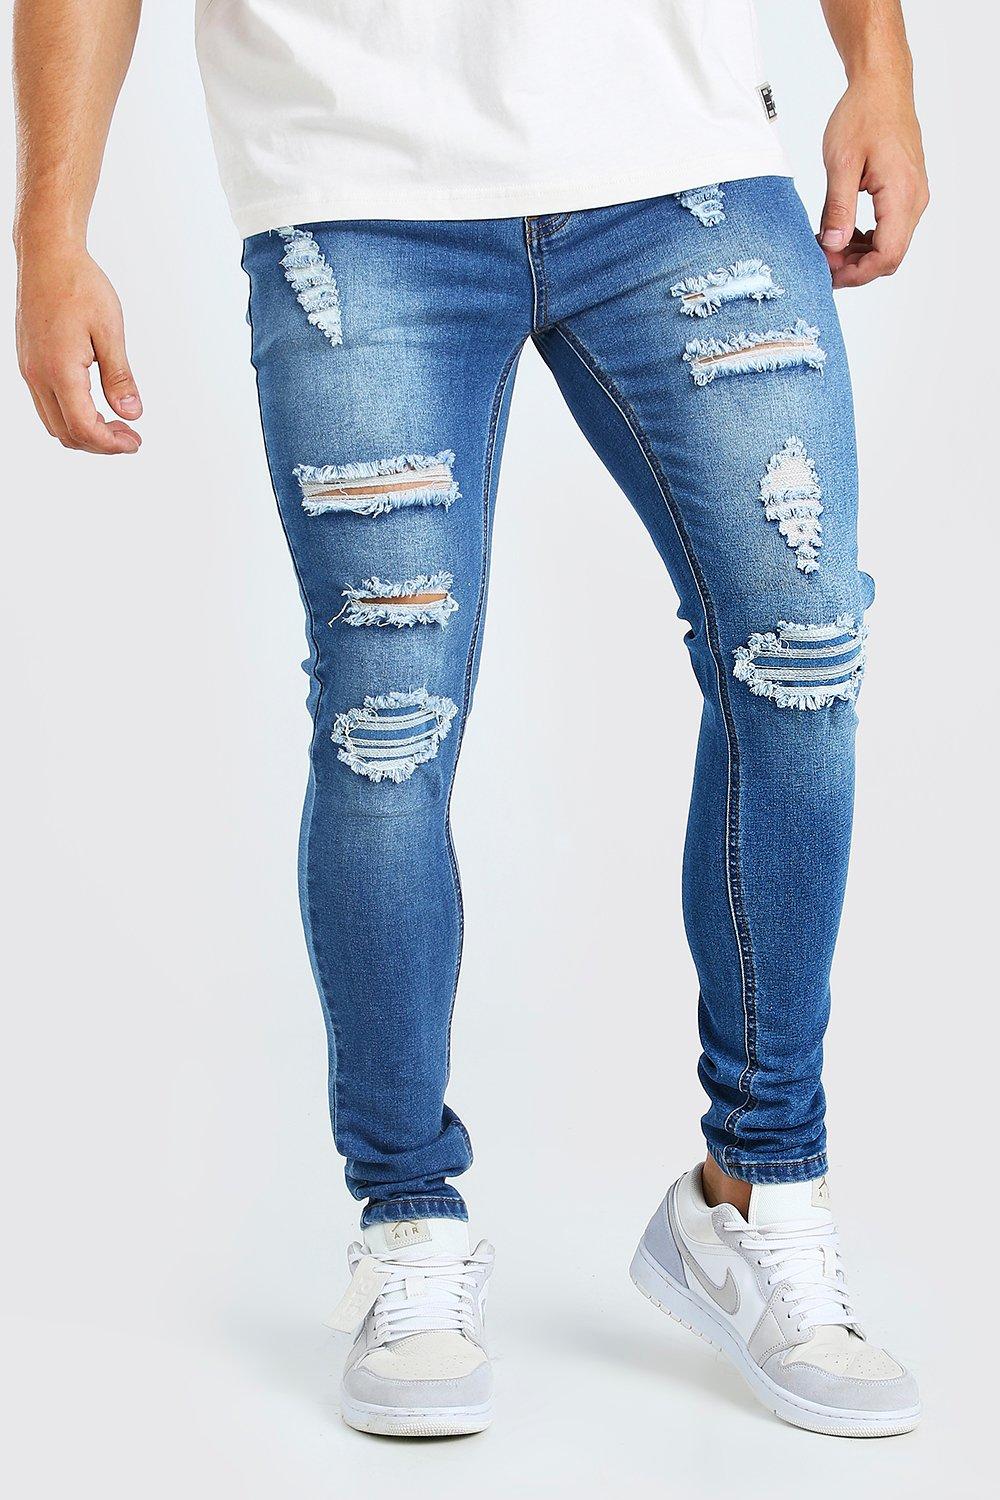 mens skinny jeans ireland